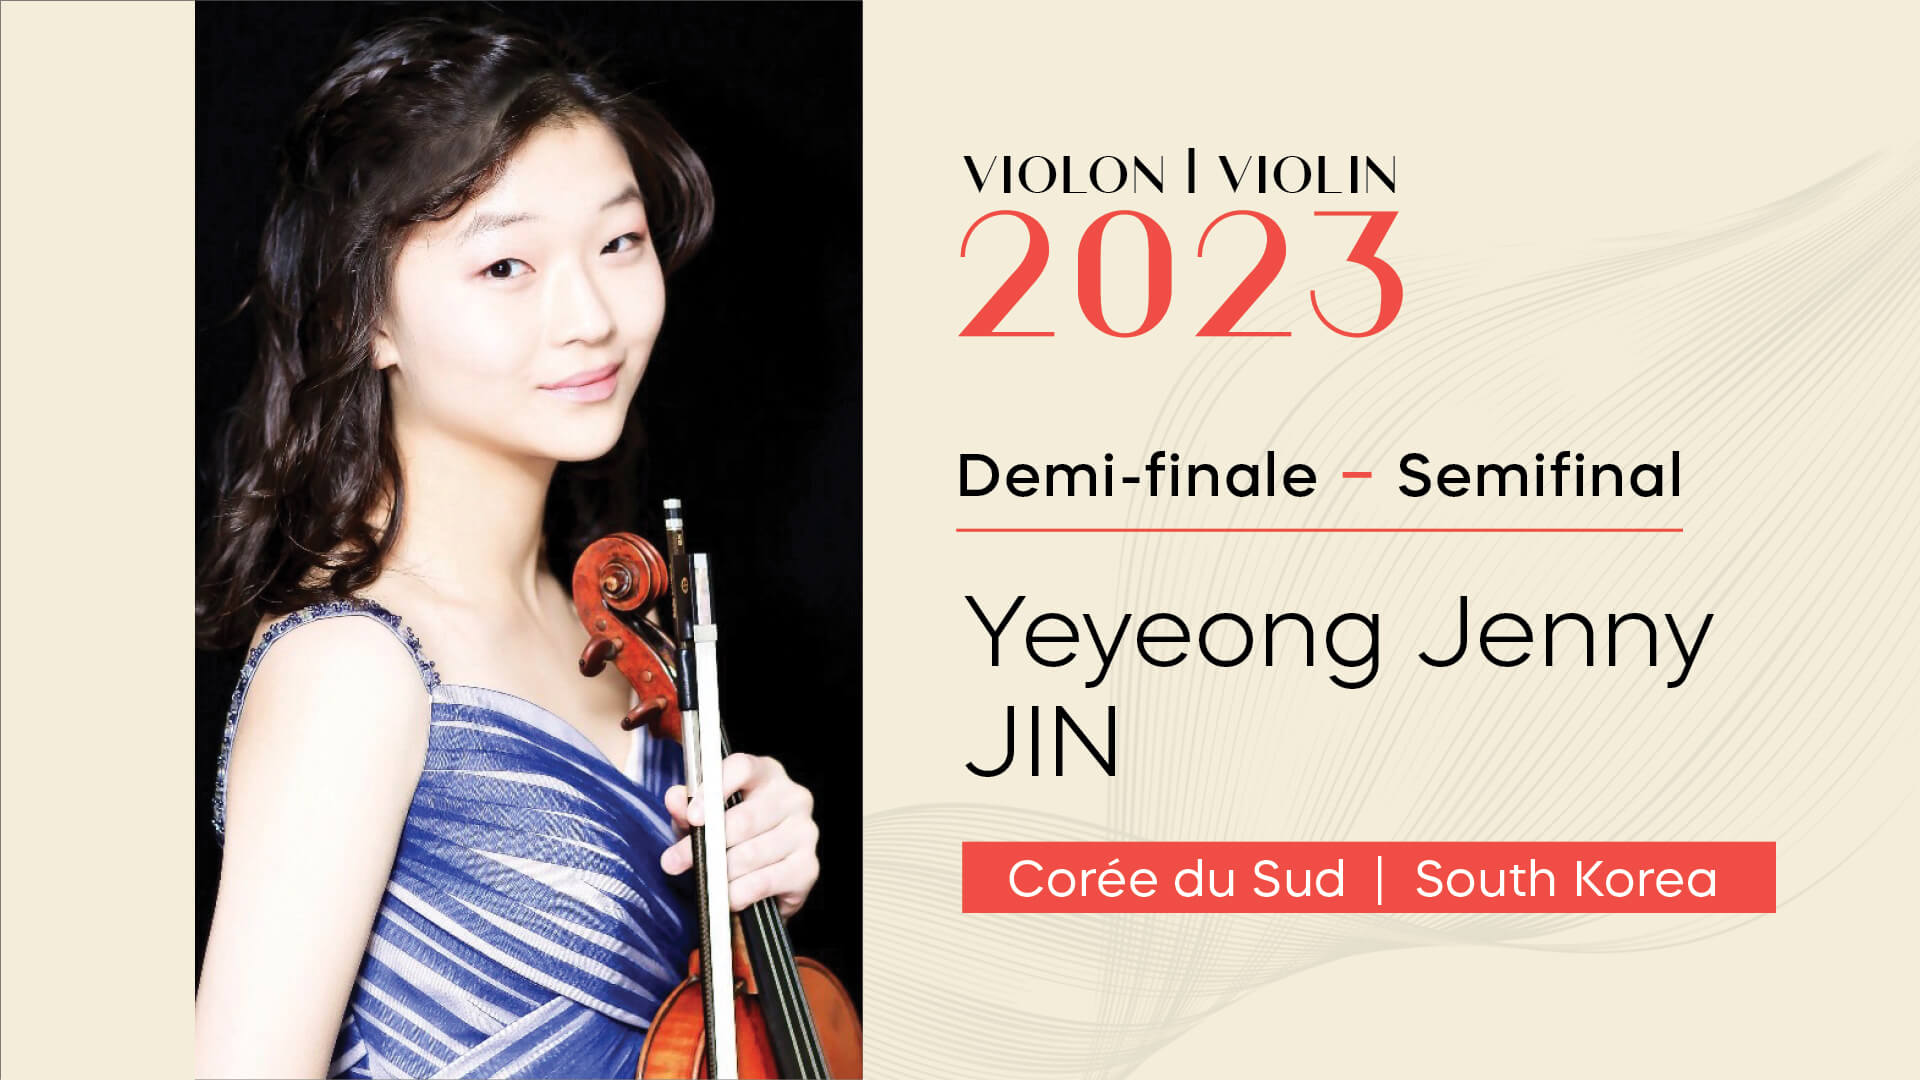 Yeyeong Jenny Jin